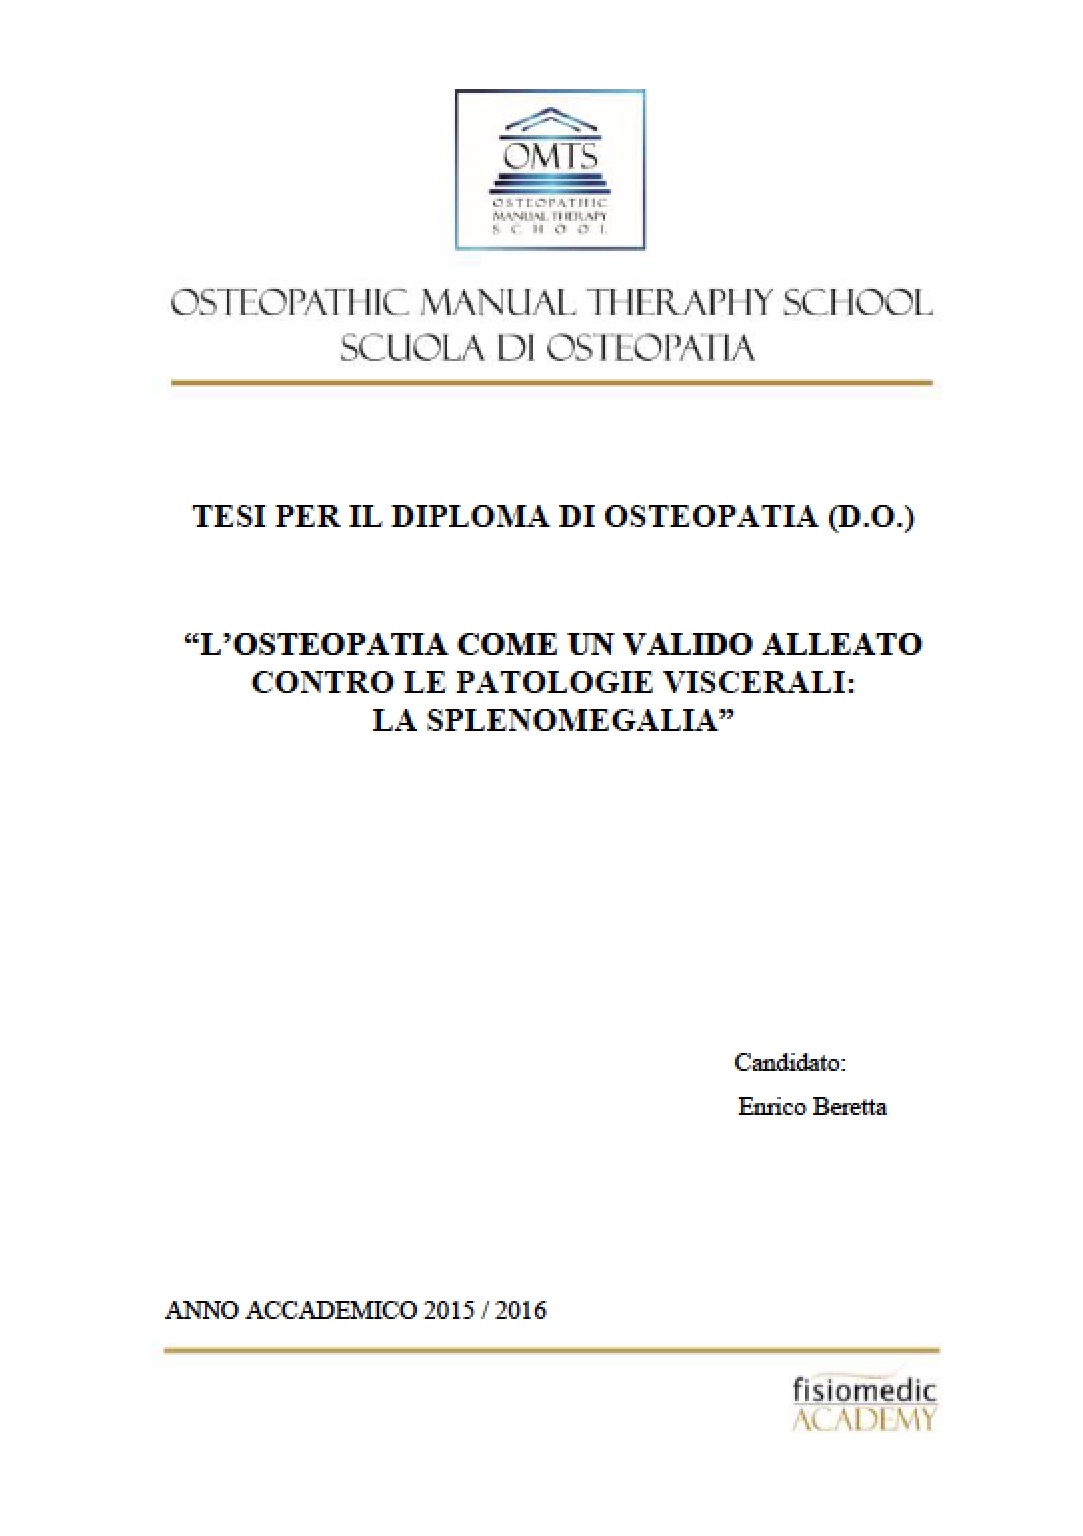 Enrico Beretta Tesi Diploma Osteopatia 2016